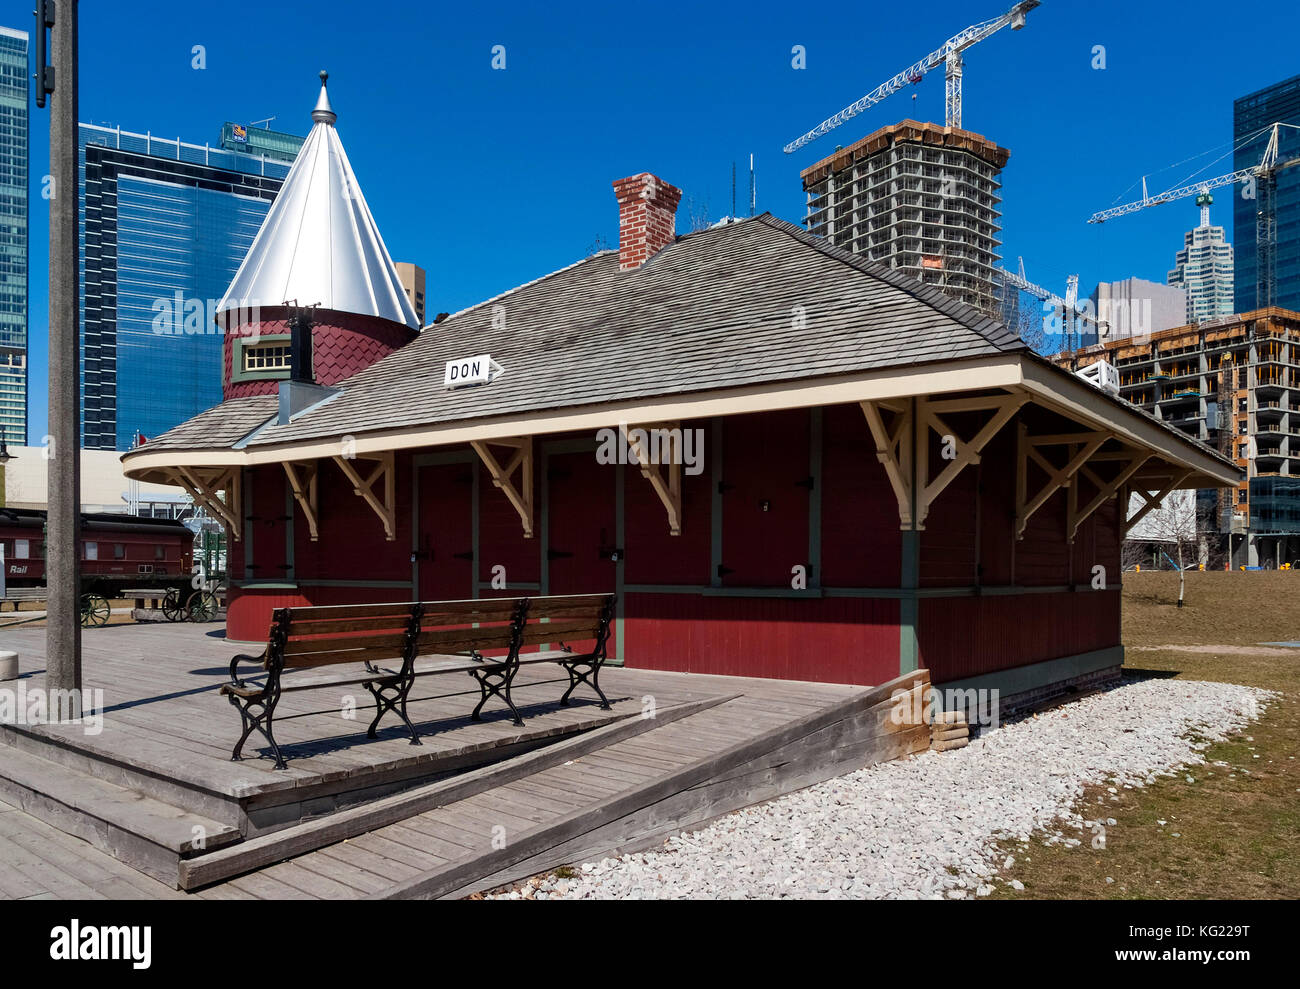 Toronto, Ontario, Kanada: Don Station bei John Street Roundhouse (Museum) - Downtowm Kanada Stockfoto